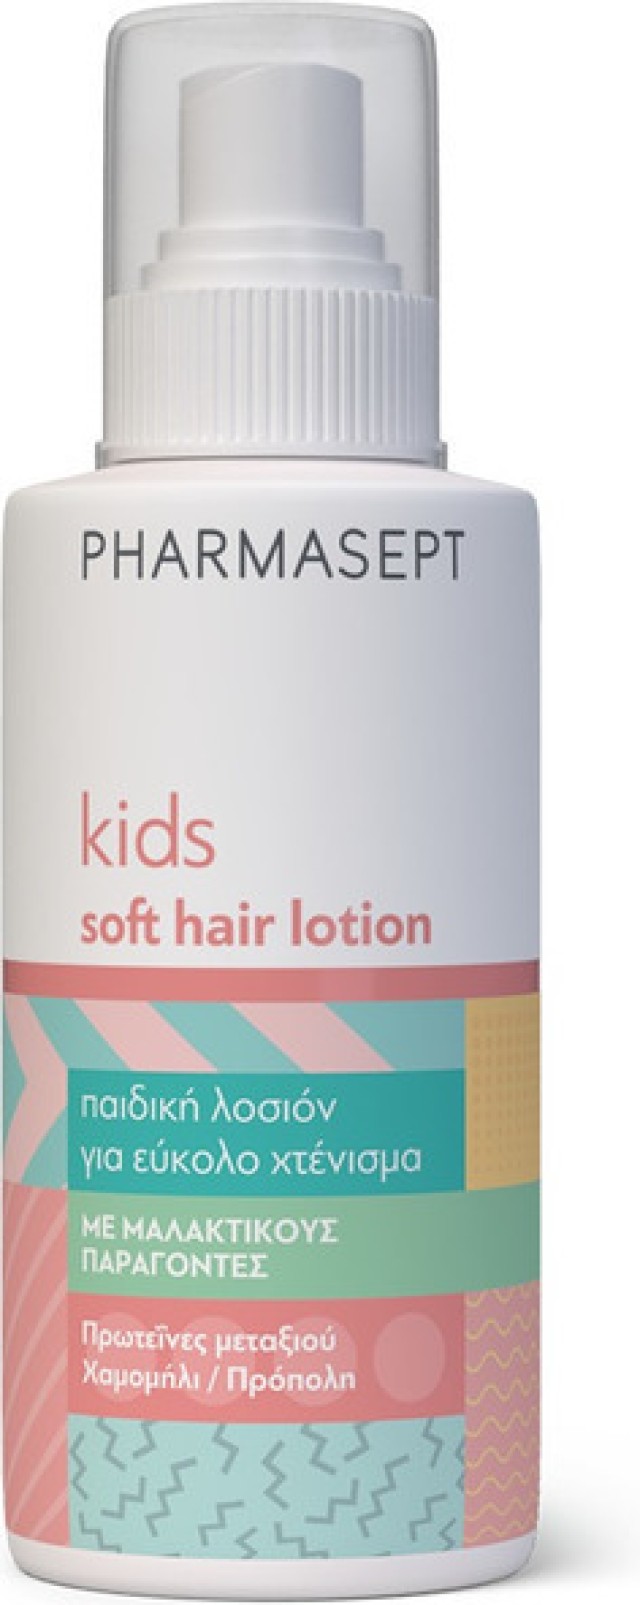 Pharmasept Kid Care Soft Hair Lotion Παιδική Λοσιόν για Εύκολο Χτένισμα με Μαλακτικούς Παράγοντες 150ml Νέα Συσκευασία